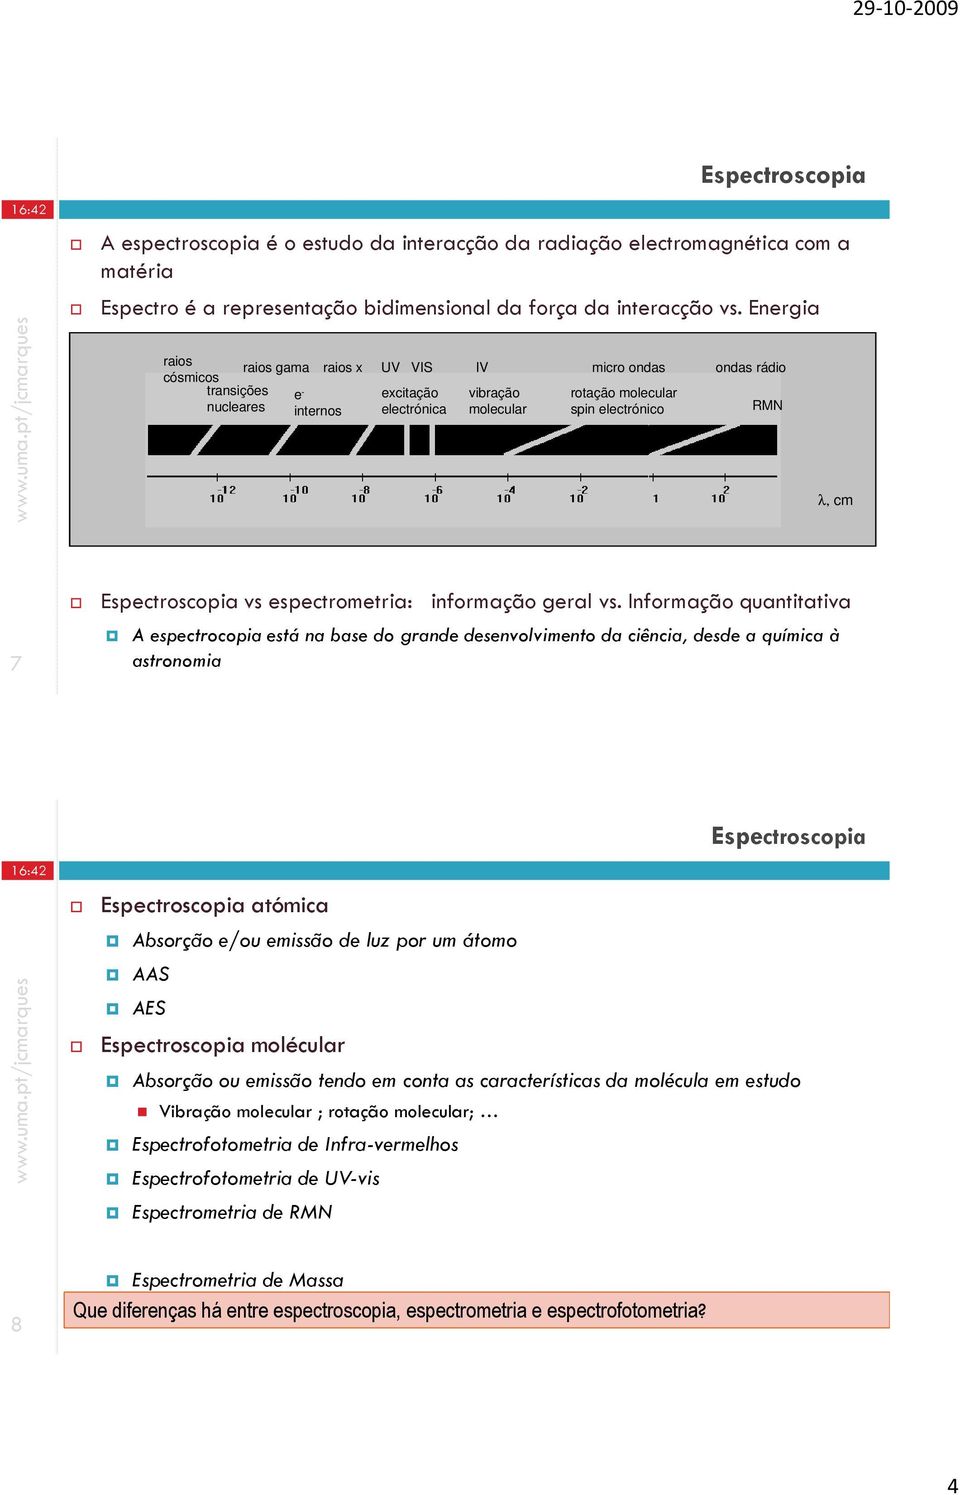 Espectroscopia vs espectrometria: informação geral vs.